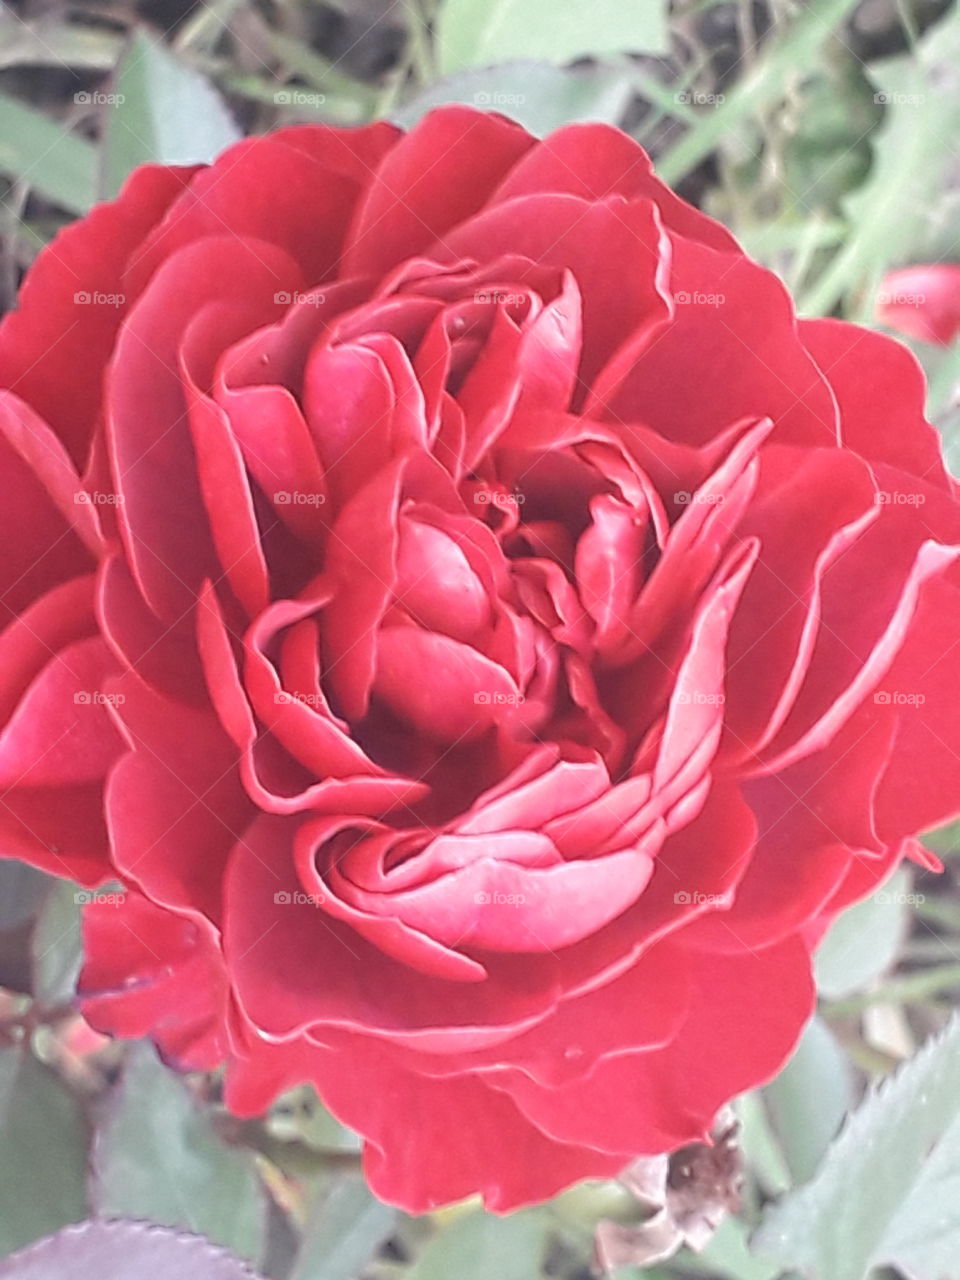 flowers in autumn - red rose in bloom in November